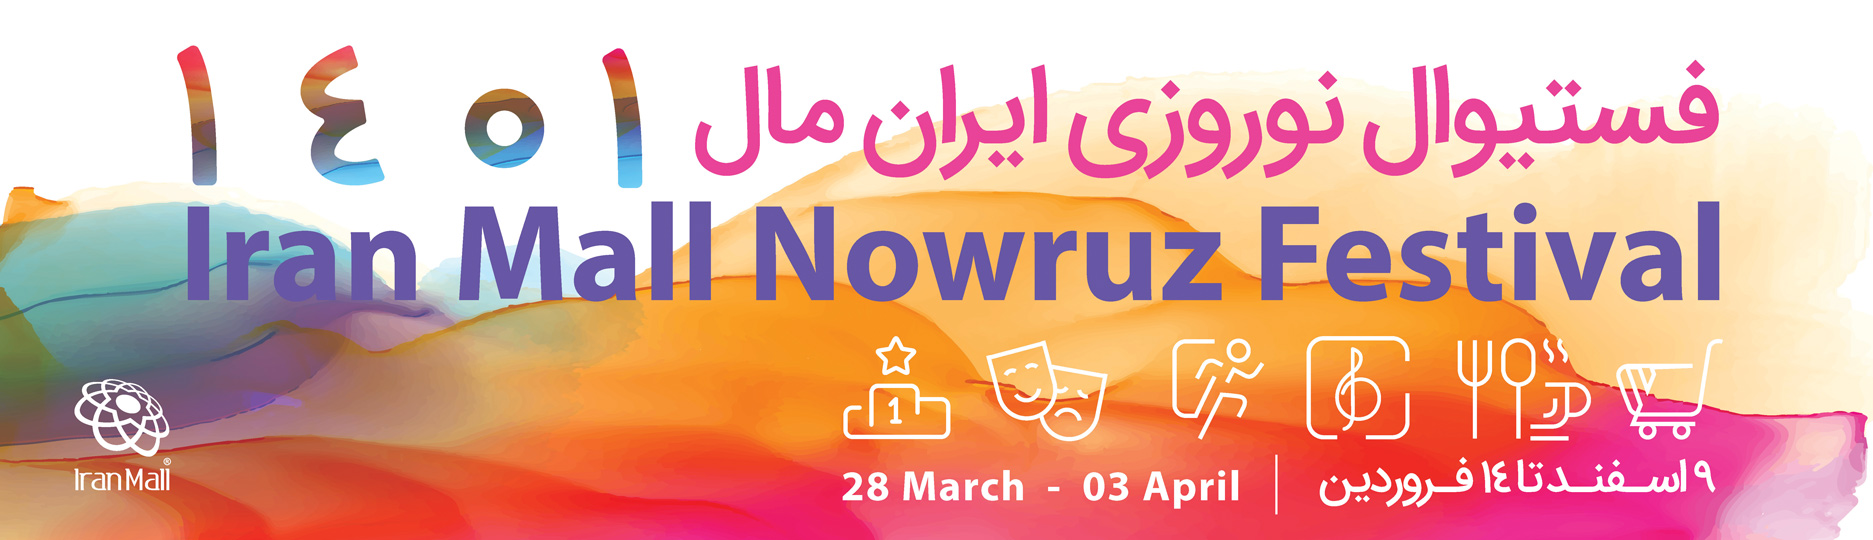 Festival de Nowruz s’est tenu en Iran Mall